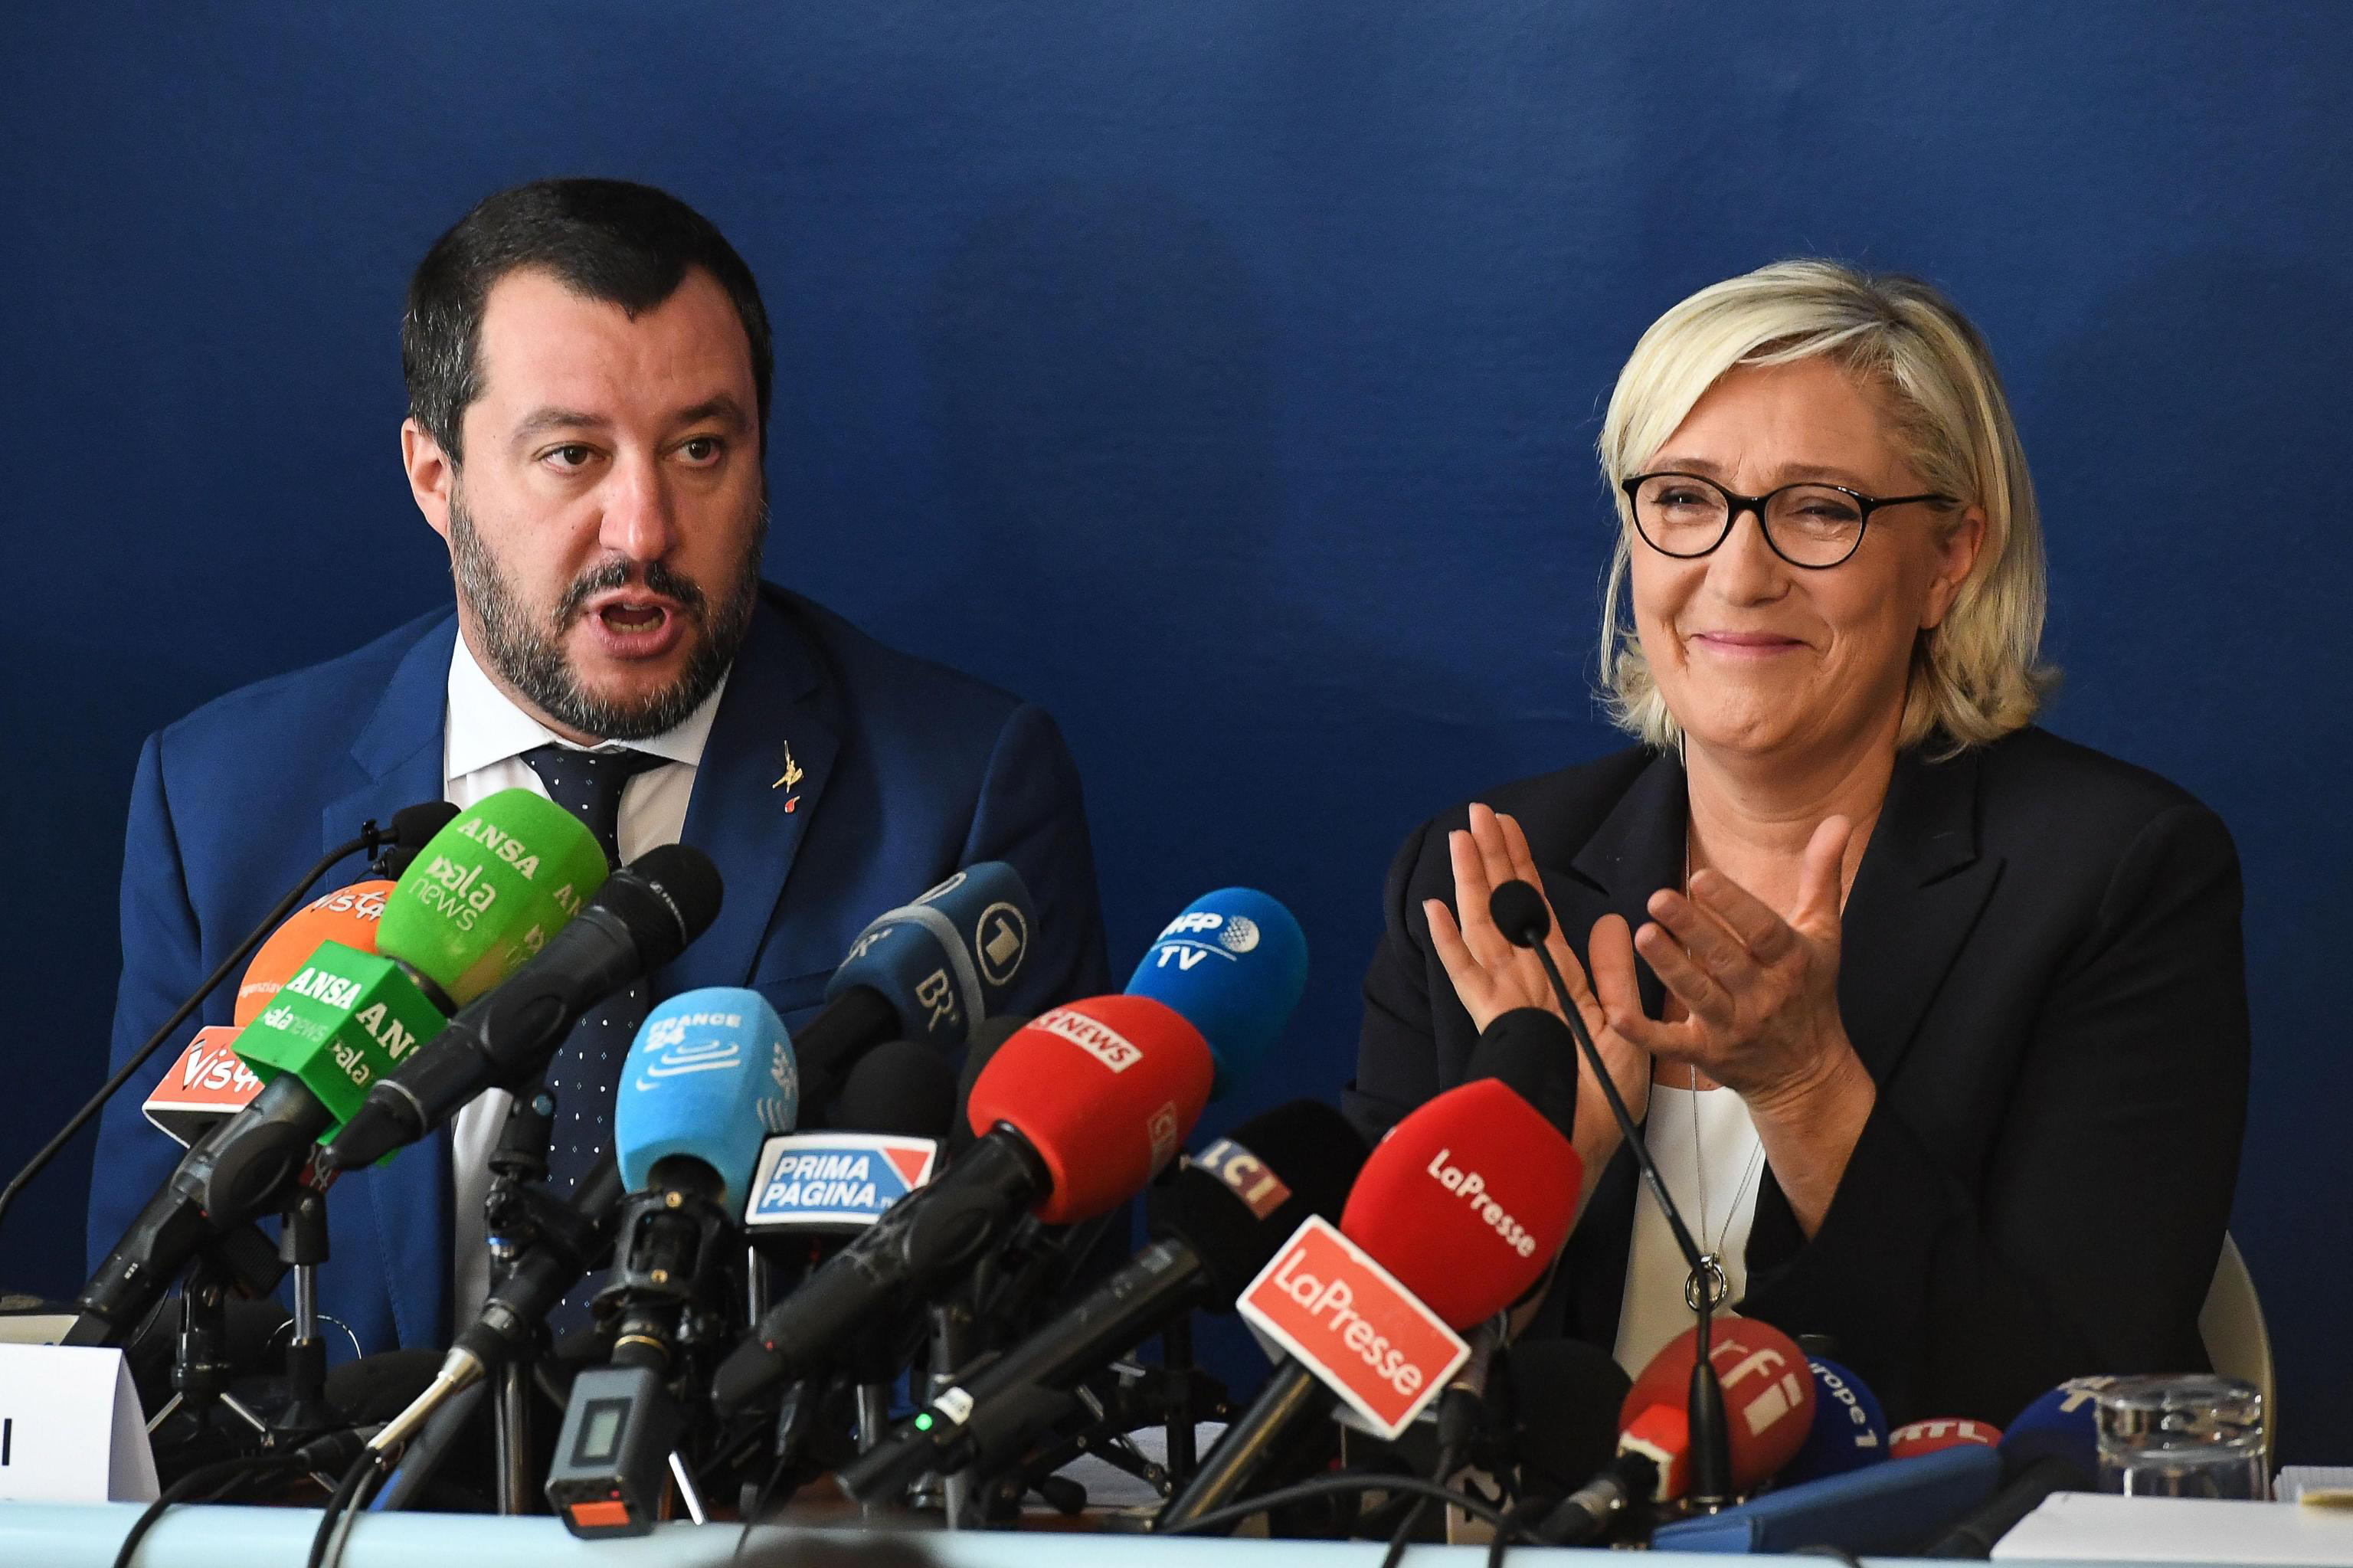 De Italiaanse, populistische politicus Matteo Salvini en Marine Le Pen. Foto: EPA/ALESSANDRO DI MEO